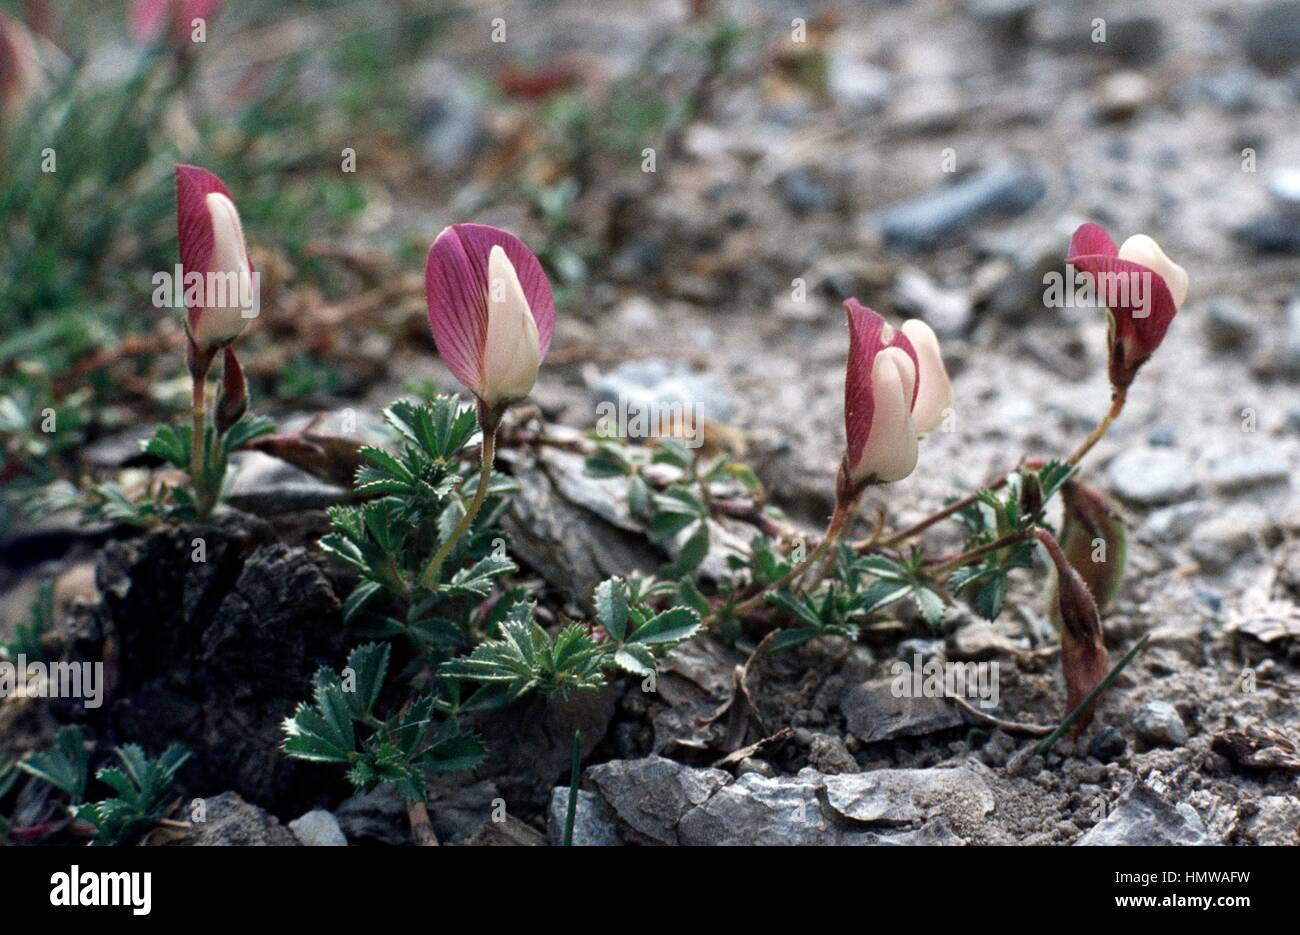 Mount Cenis Restharrow (Ononis cristata or Ononis cenisia), Fabaceae. Stock Photo